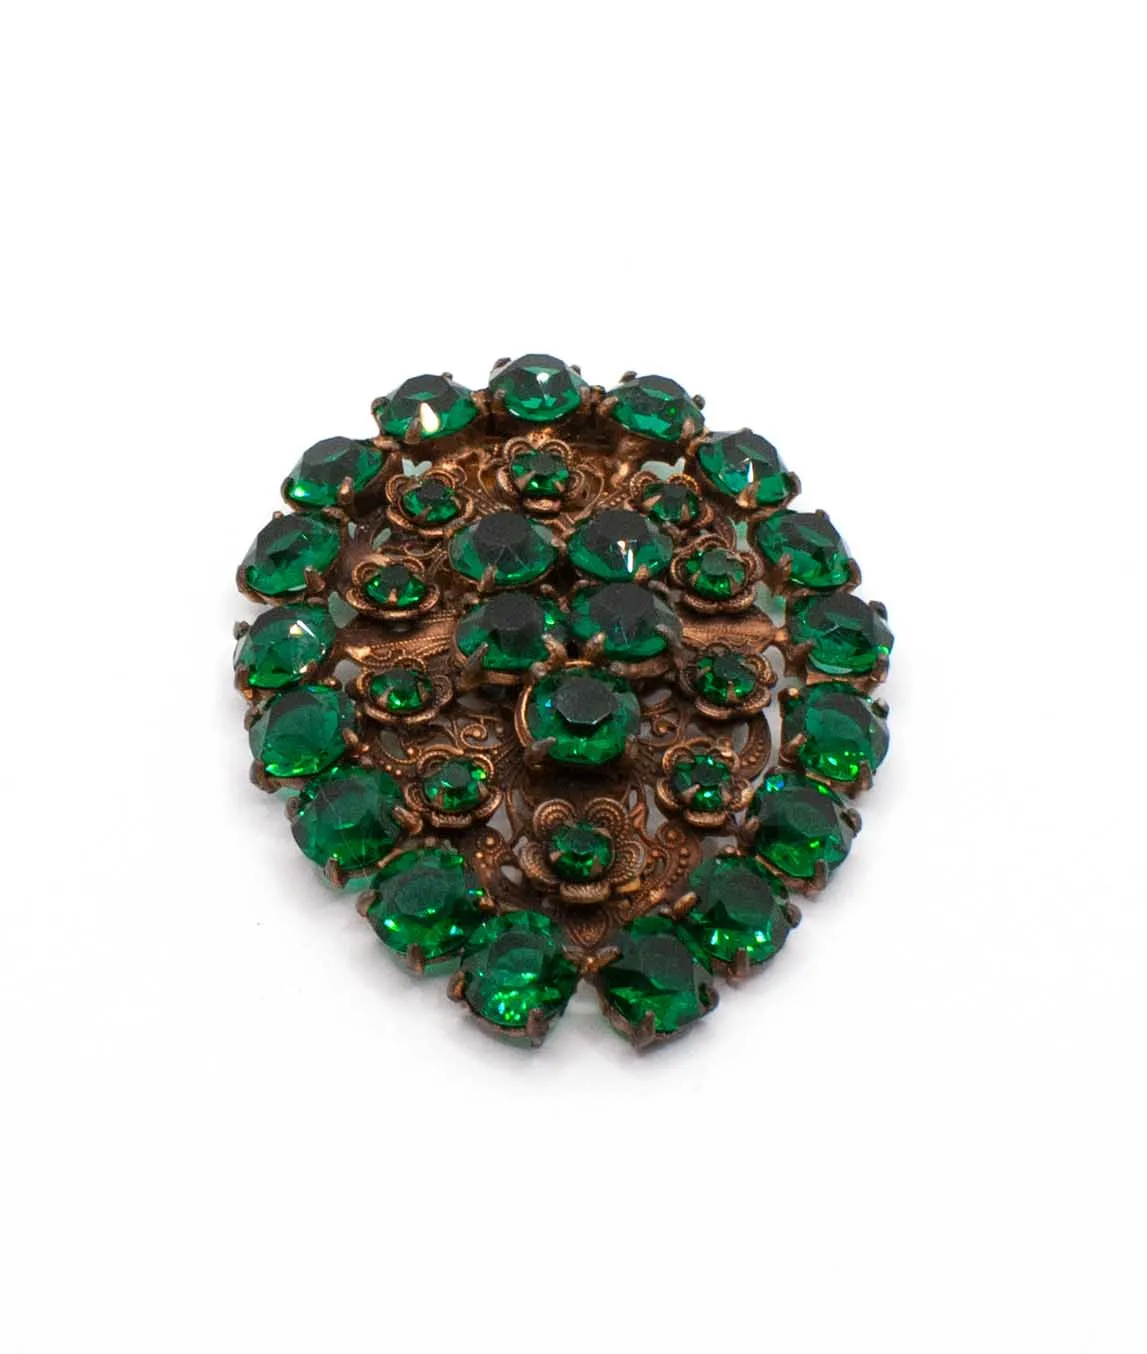 Dress clip set with dark emerald green glass crystals